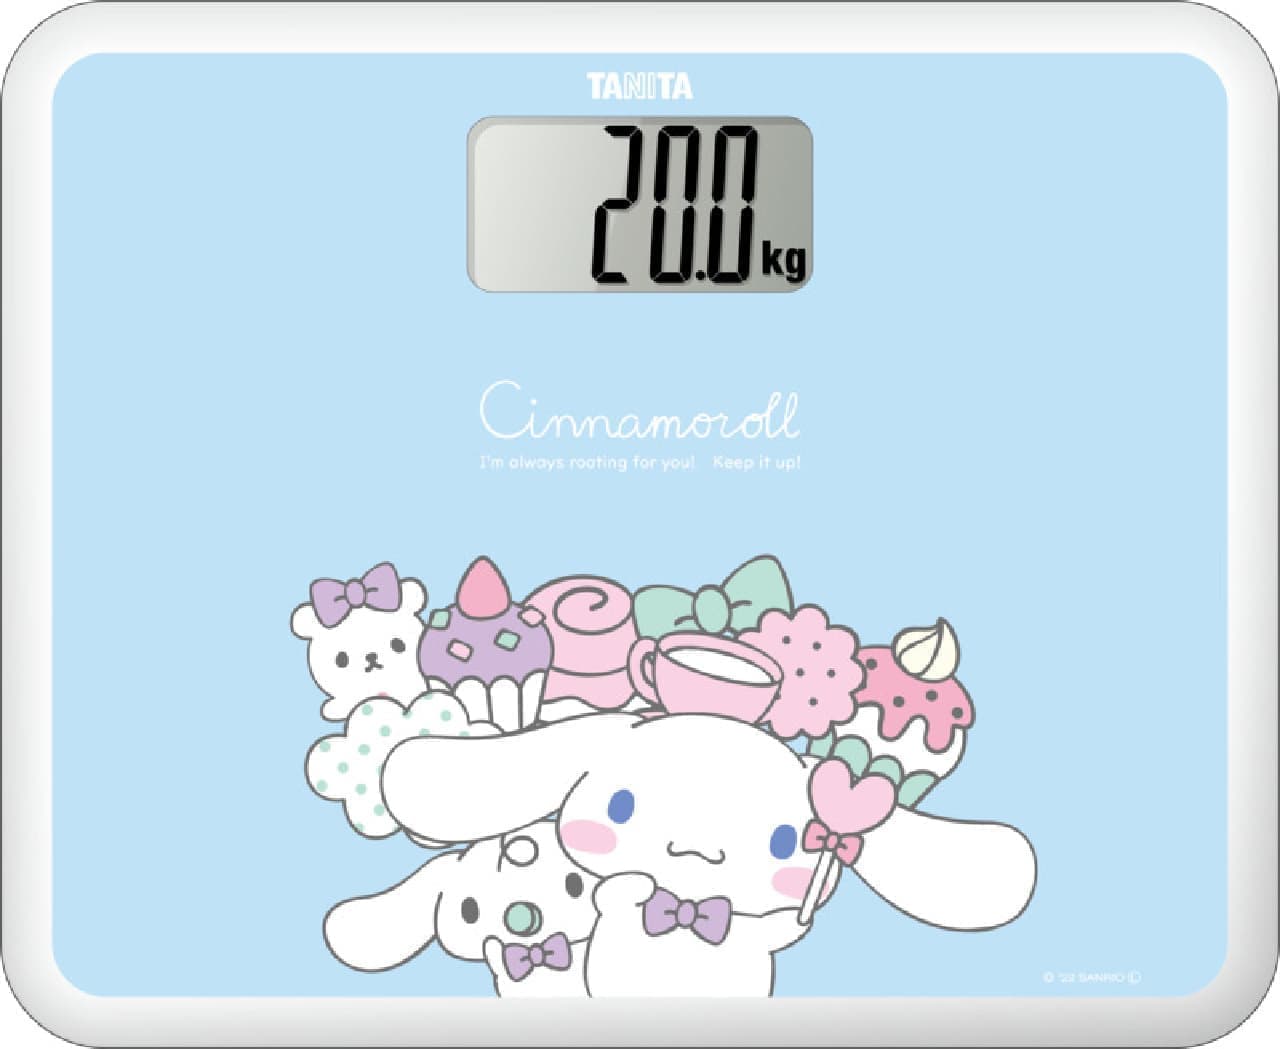 Digital Health Meter (Cinnamoroll Model)" from Tanita -- Enjoy your health! Cooking scale also